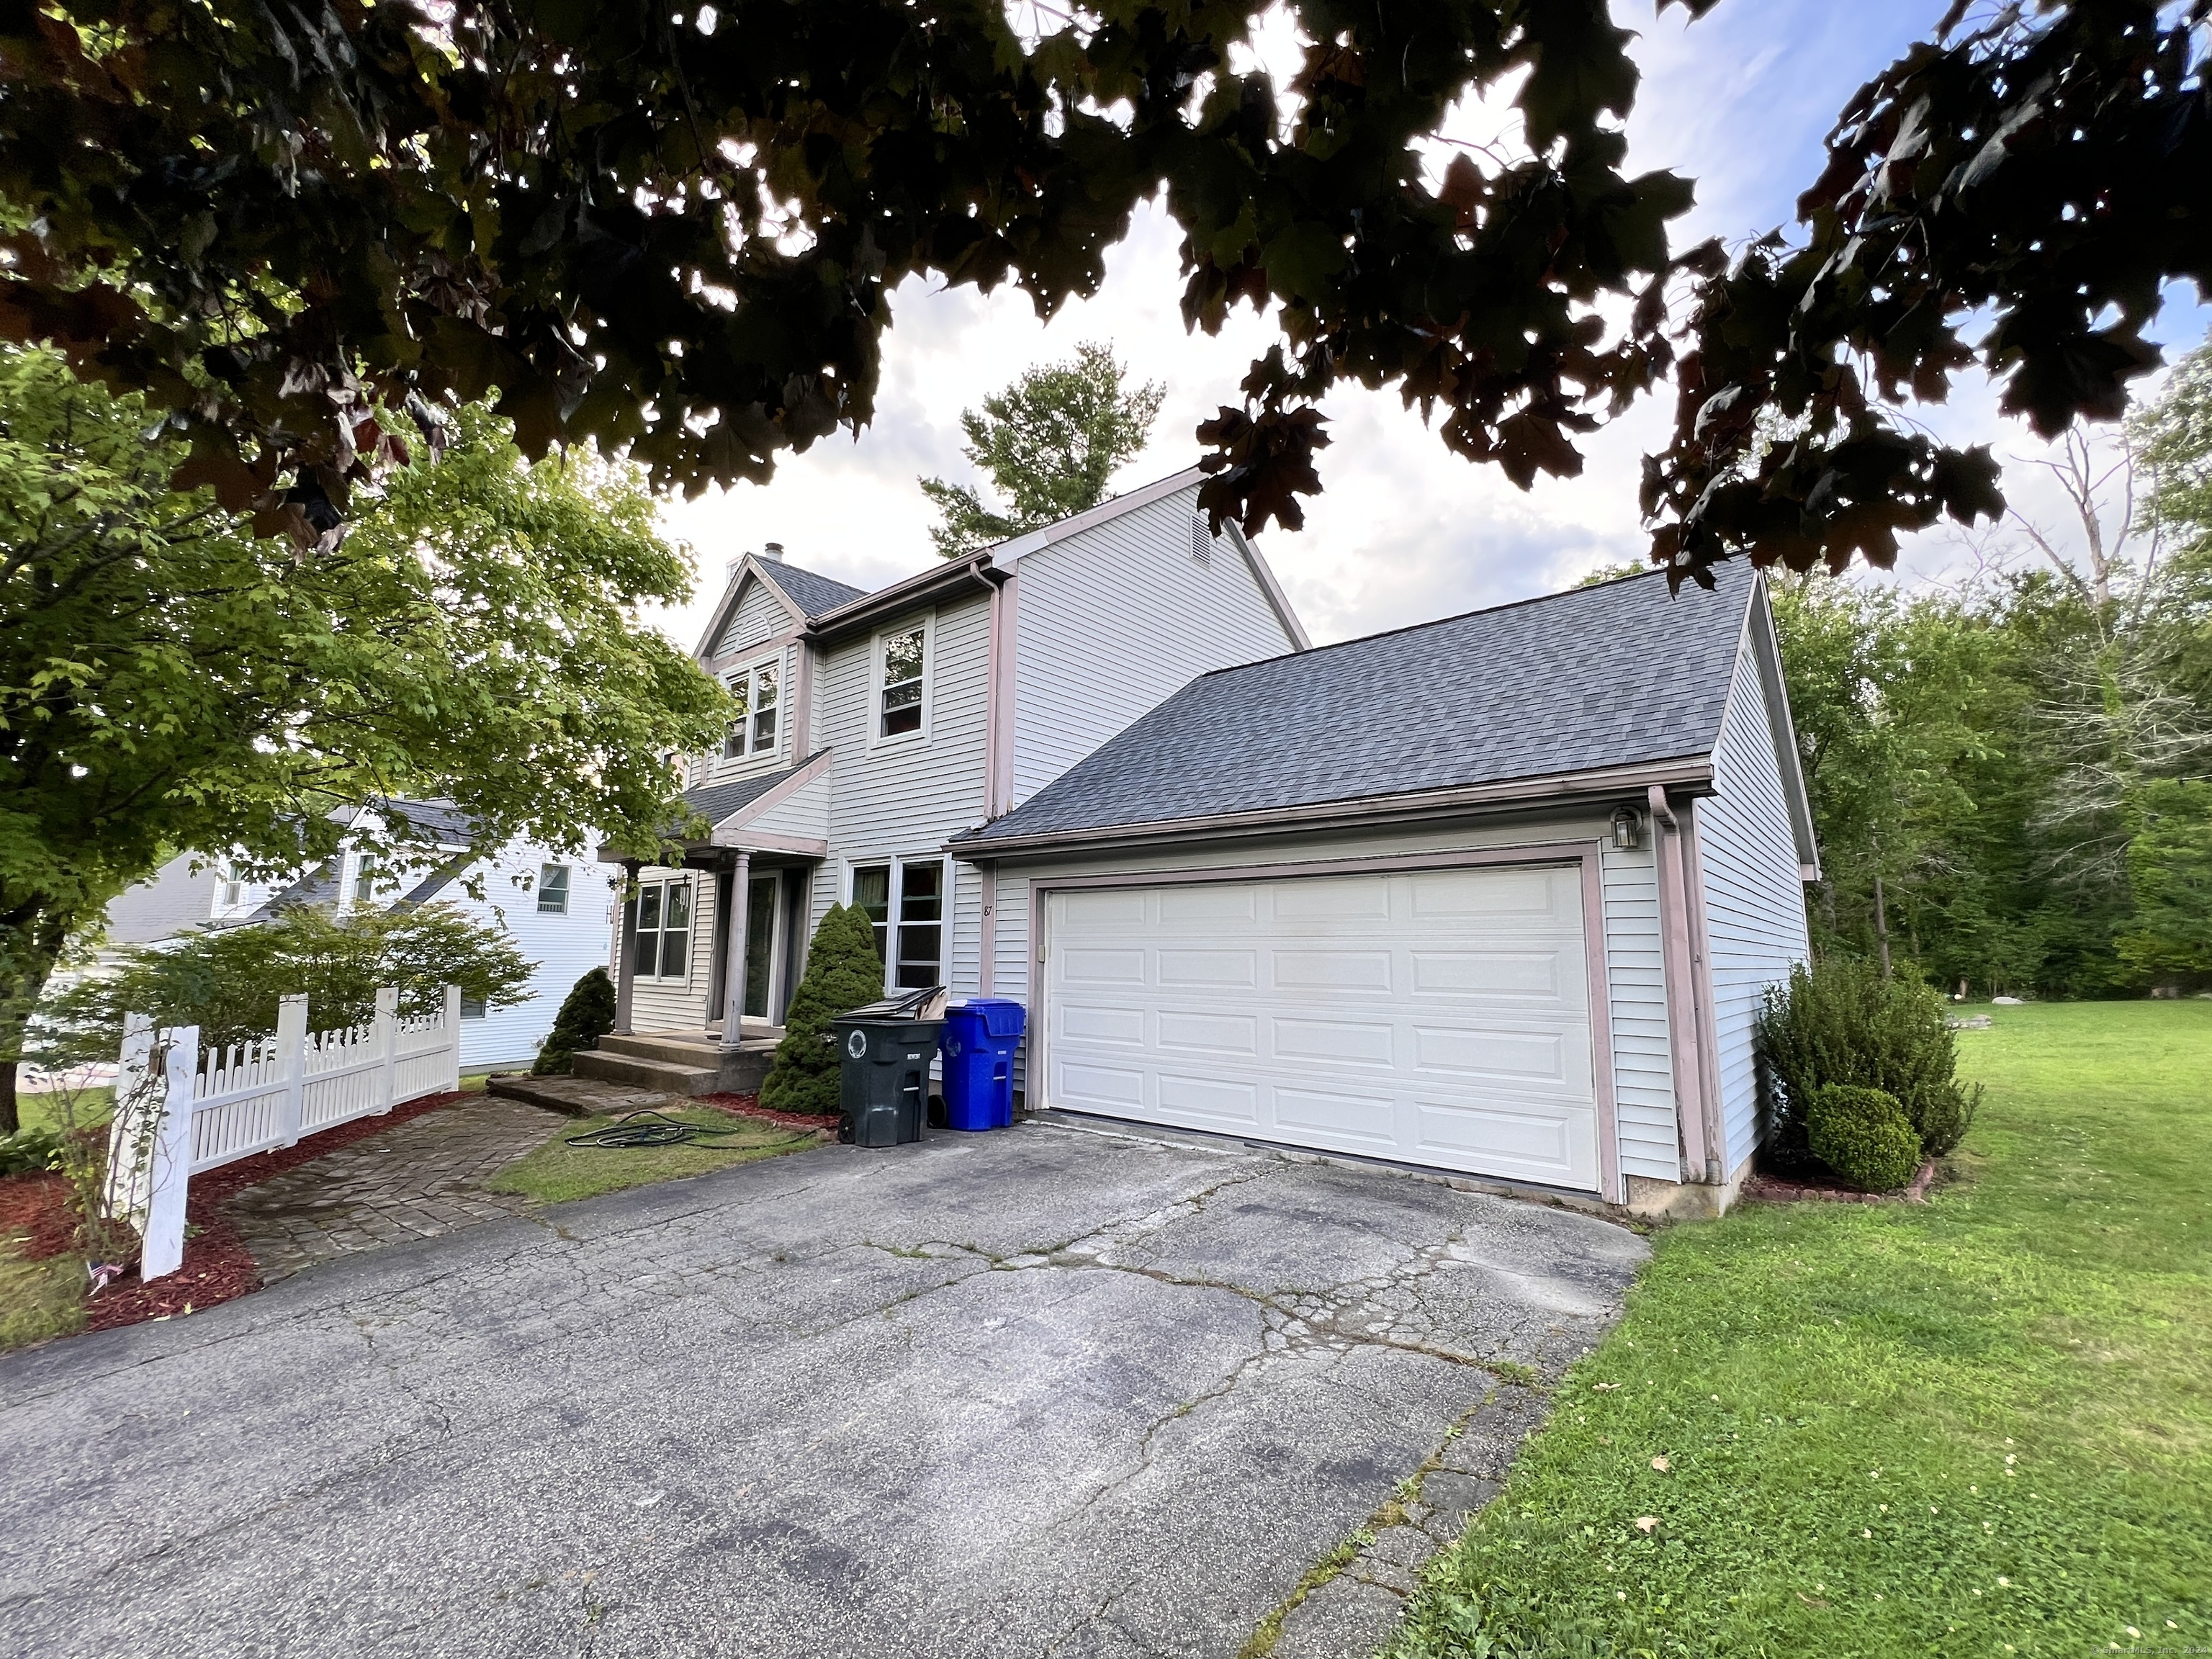 Property for Sale at 87 Deercrest Drive, Torrington, Connecticut - Bedrooms: 3 
Bathrooms: 3 
Rooms: 7  - $295,000